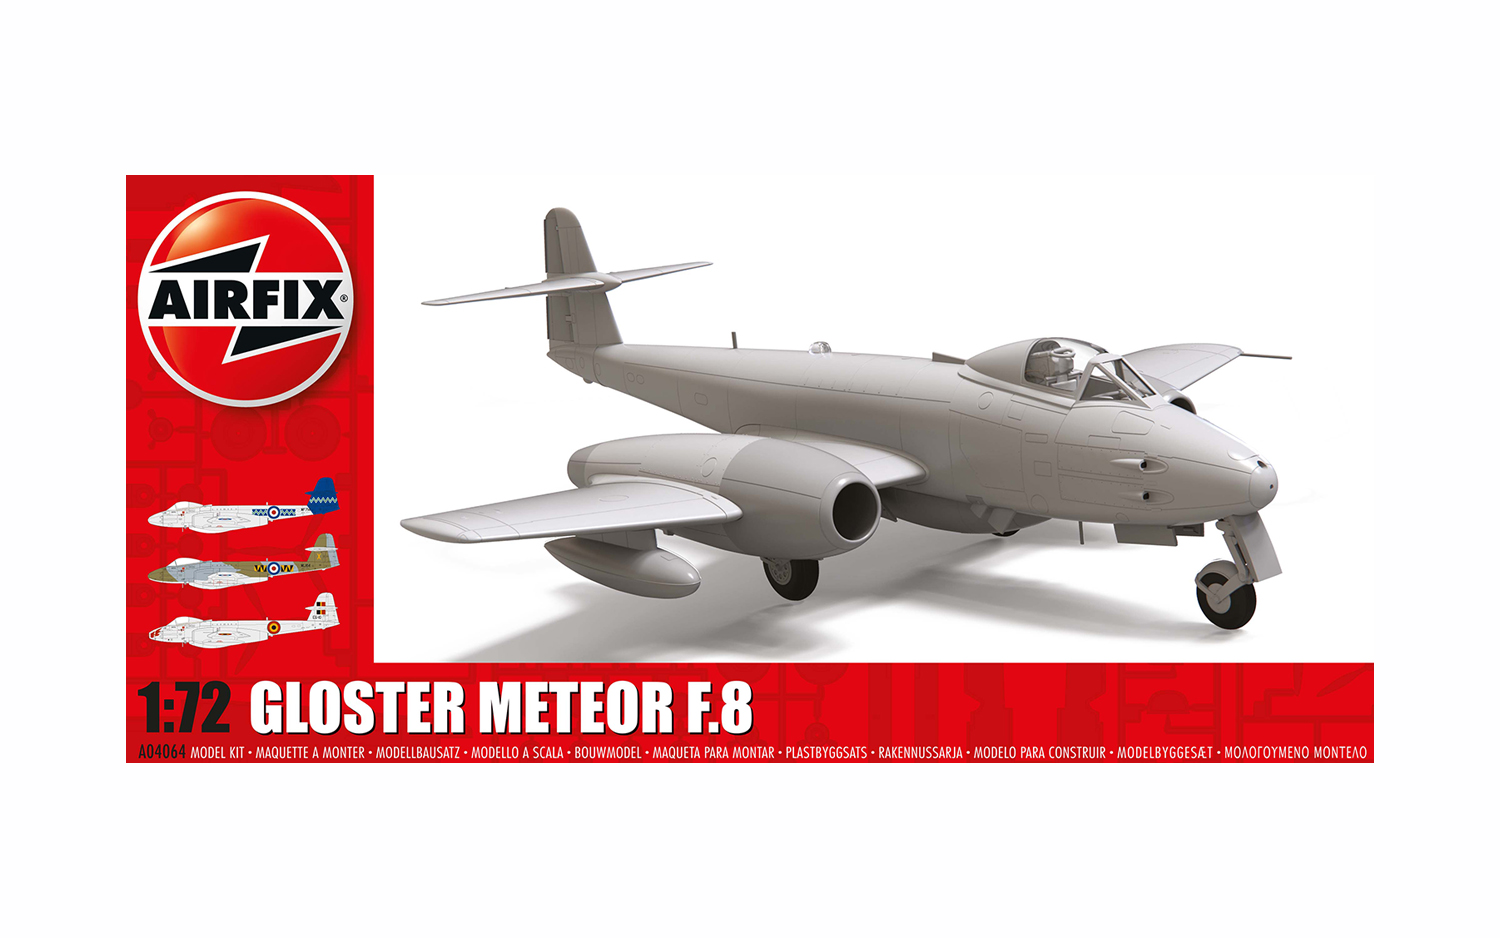 1/72 Xk72001 Gloster Meteor F MK 8 for sale online Xtrakit mpm 